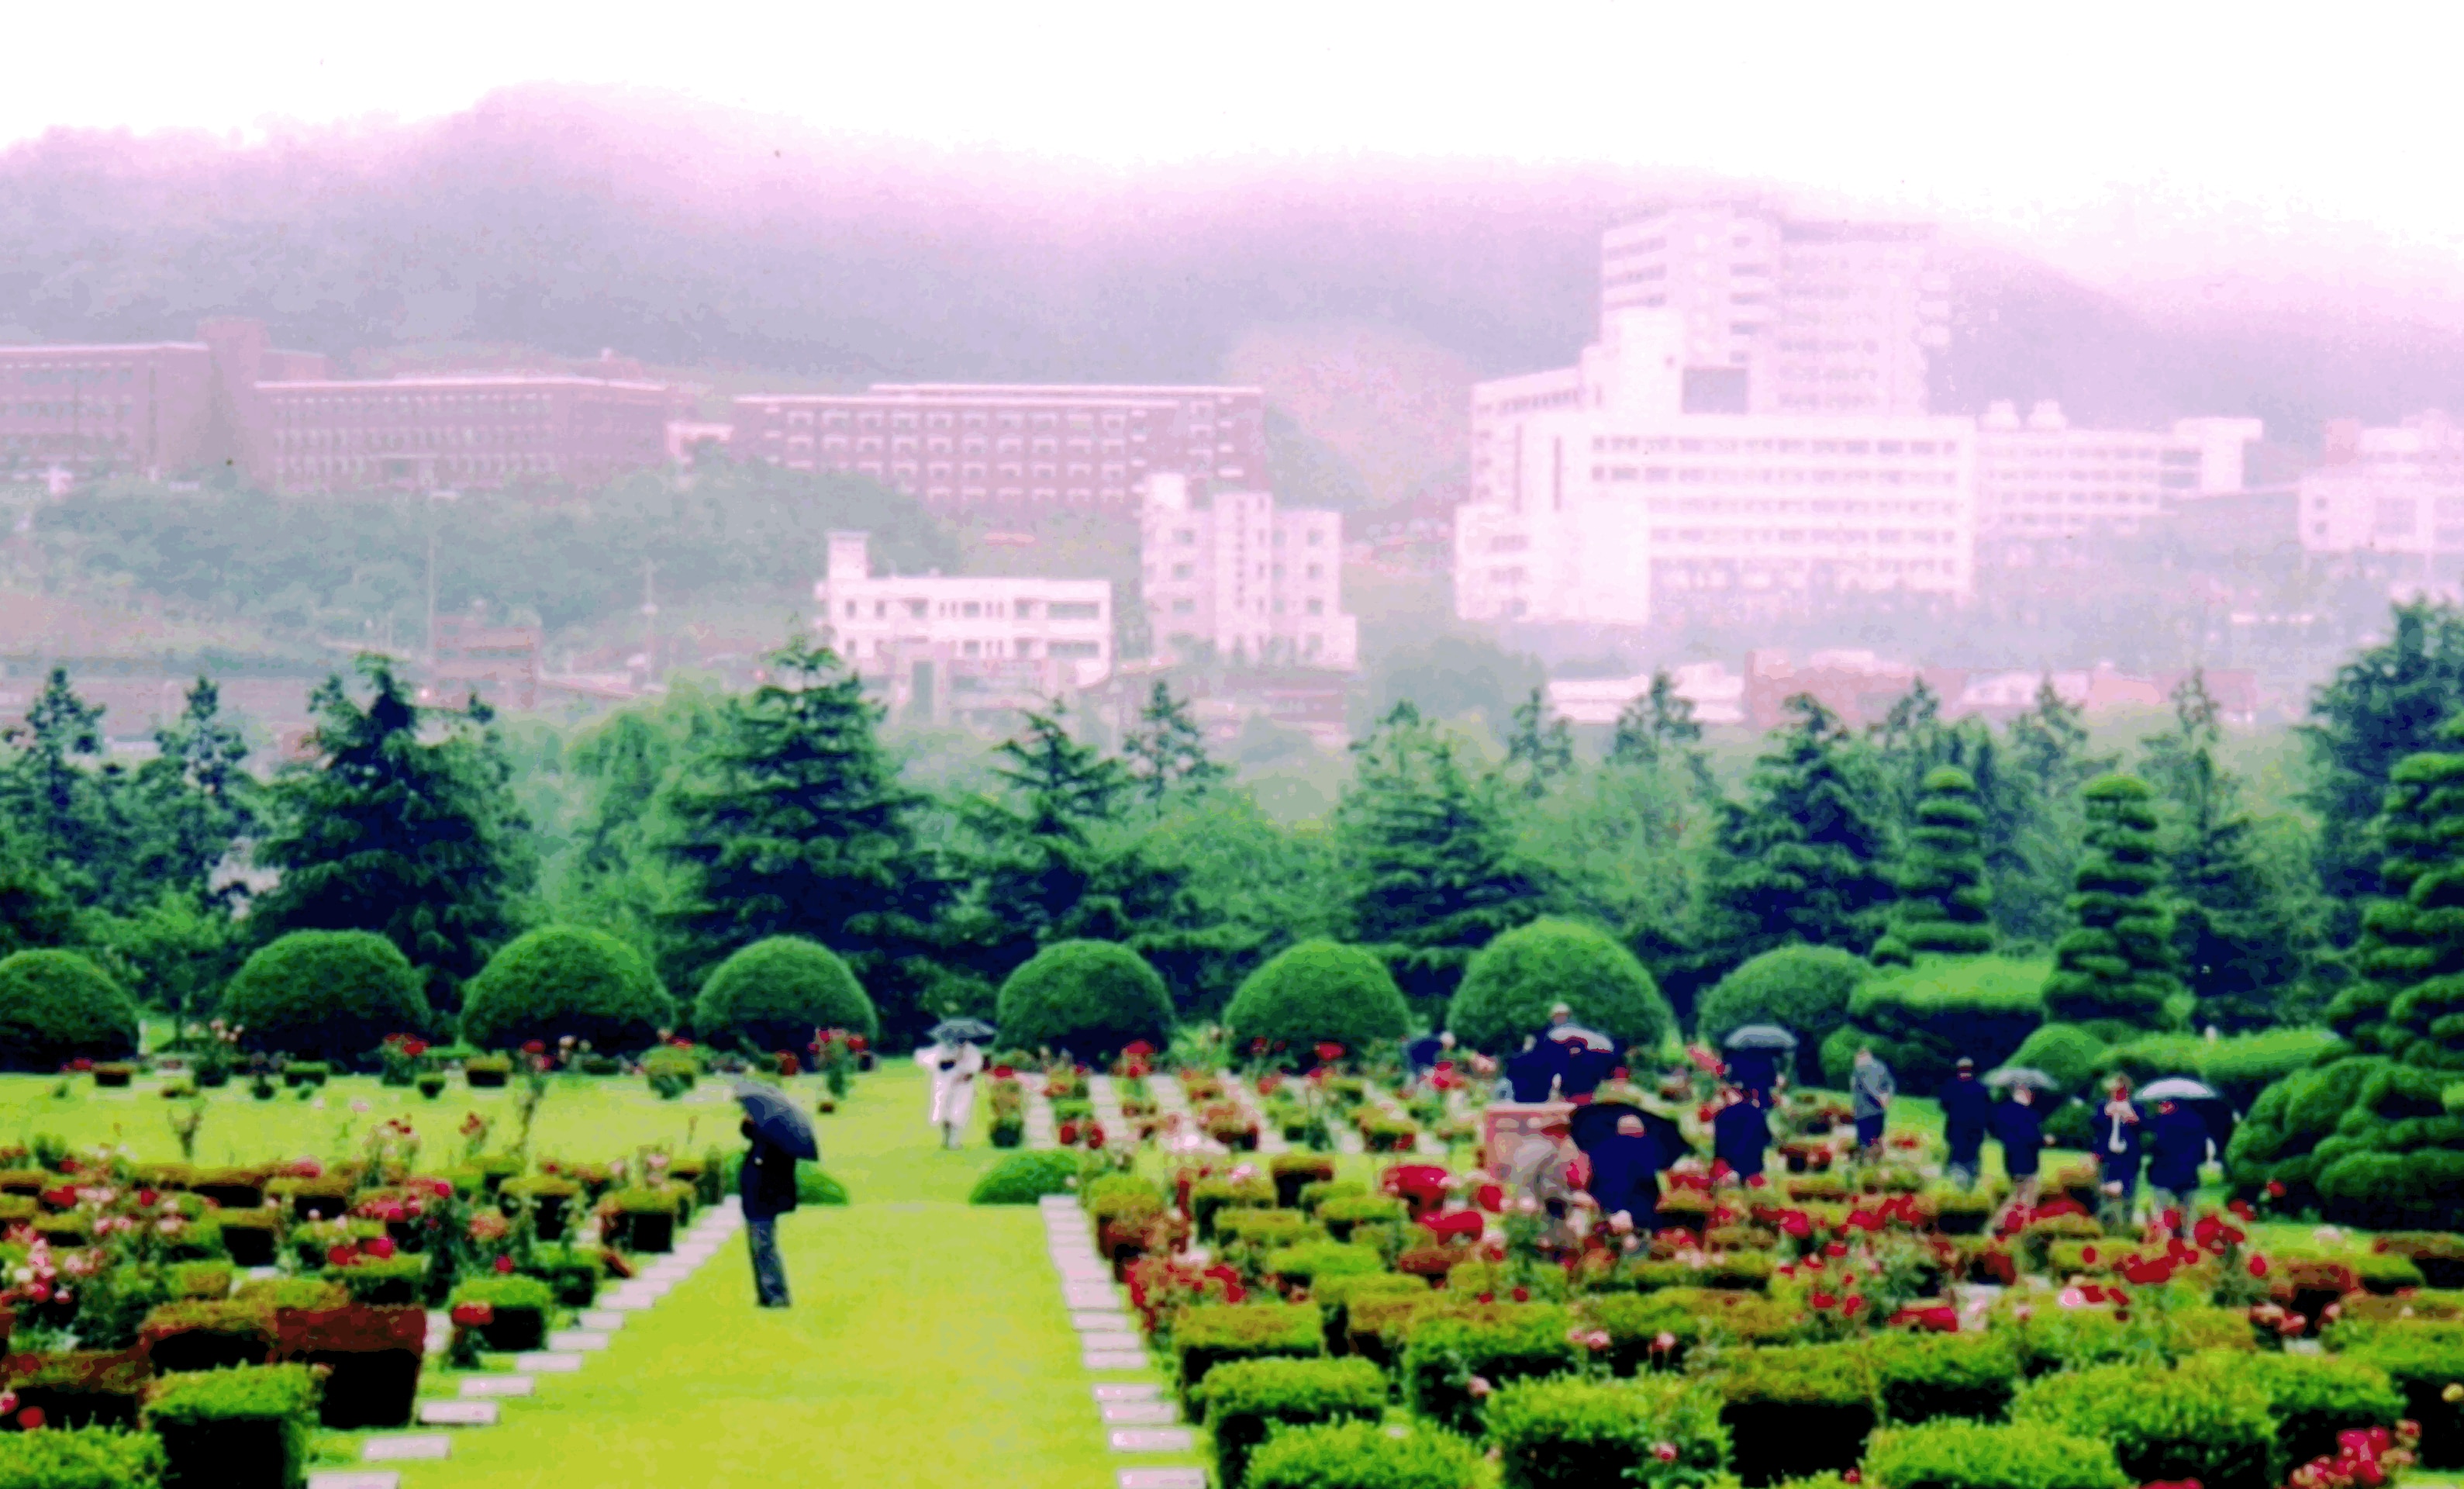 UN Memorial Cemetery in Busan, Korea in 2000